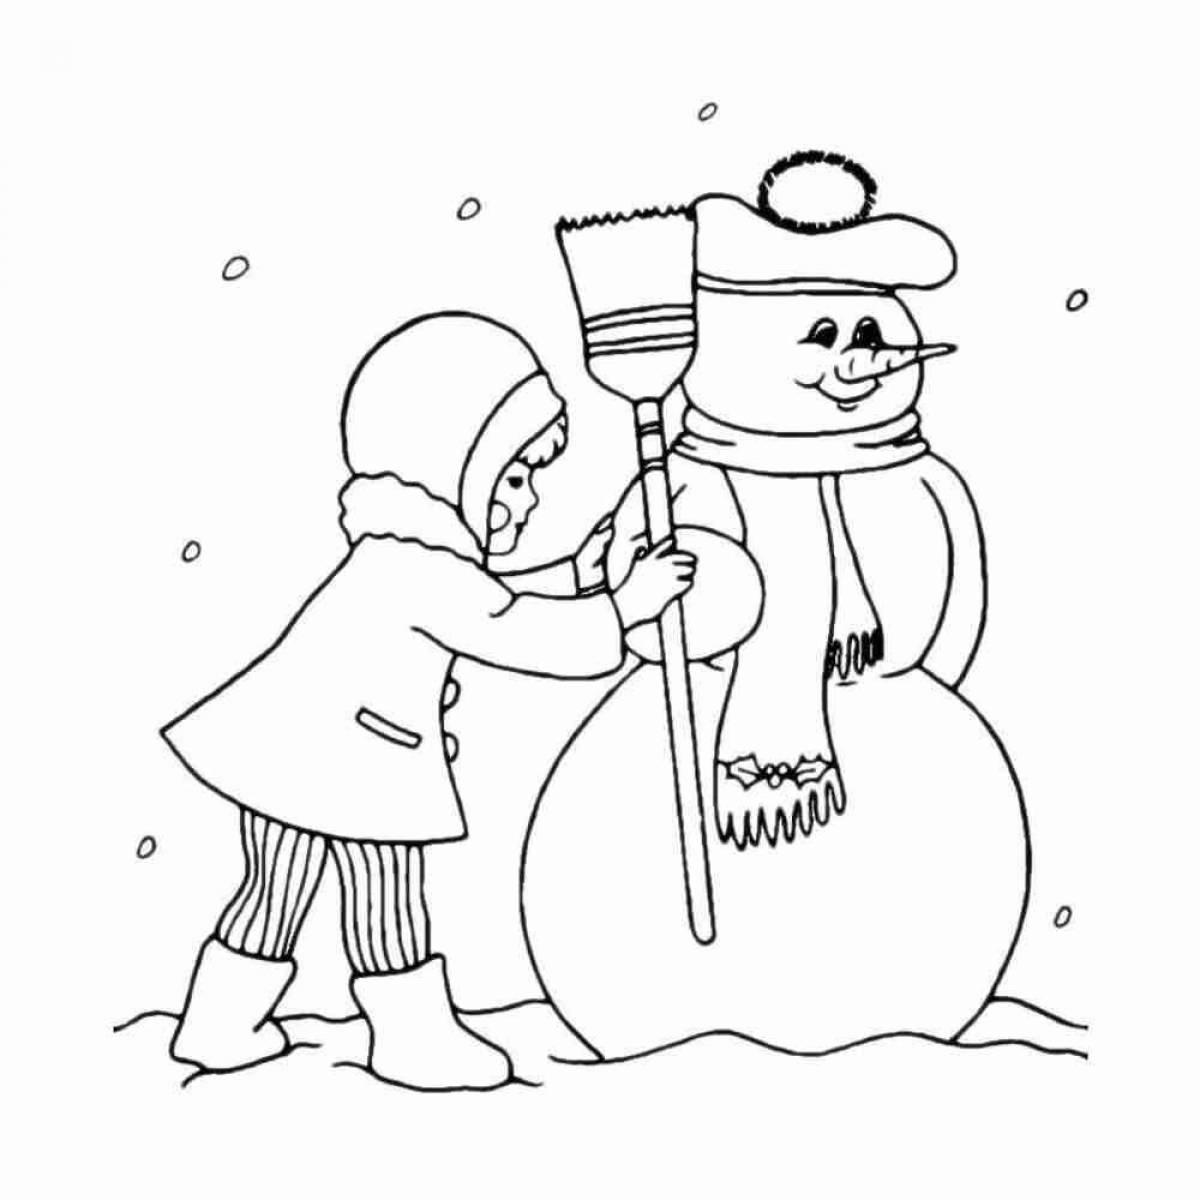 Children making a snowman #1